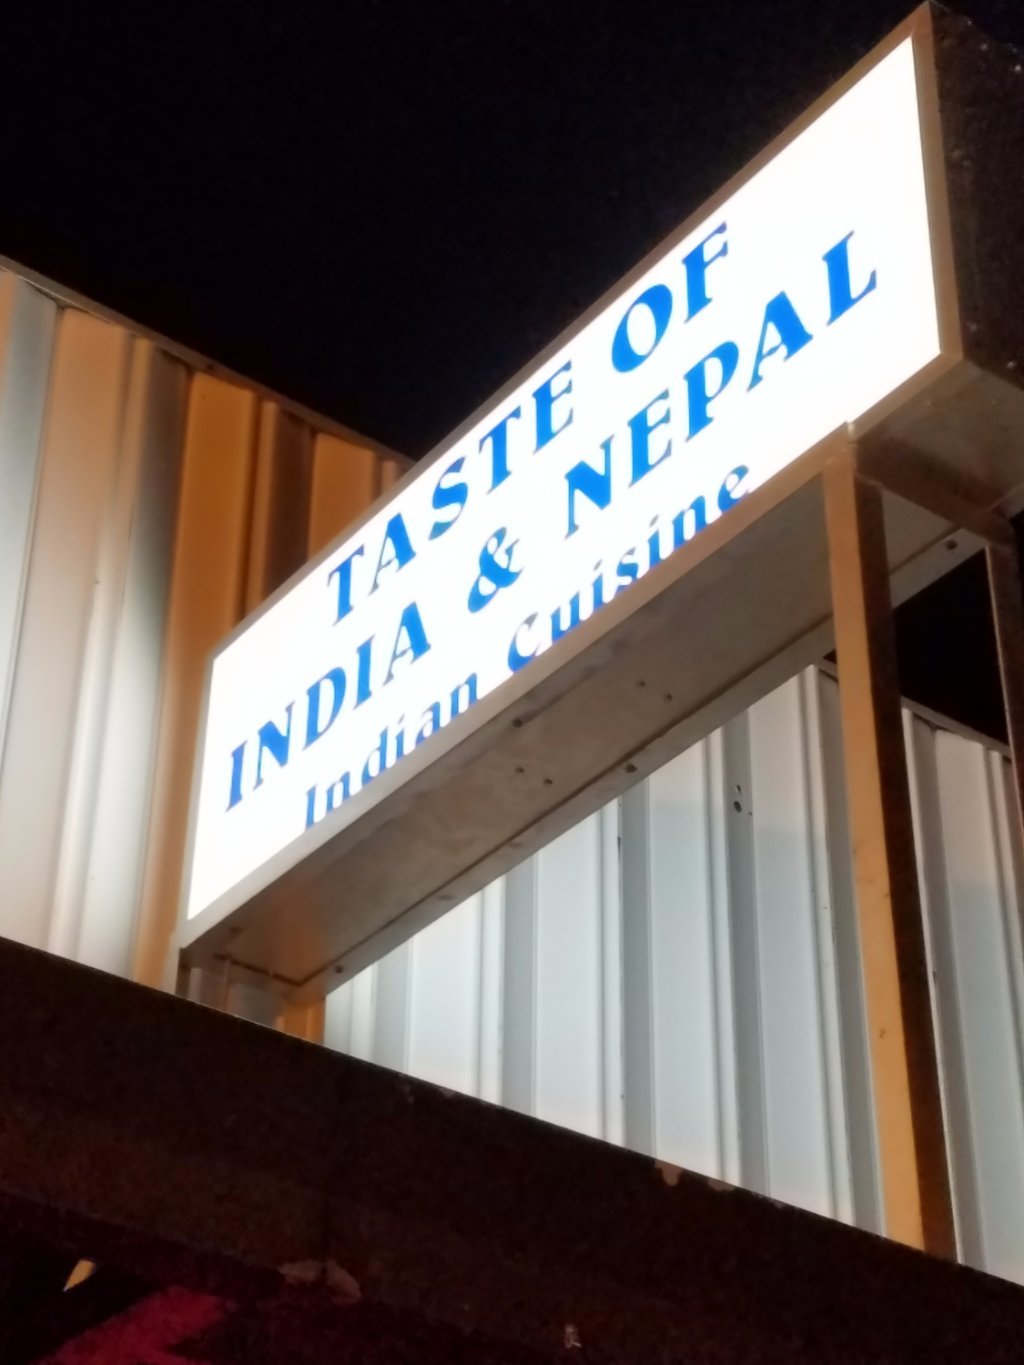 Taste of India and Nepal